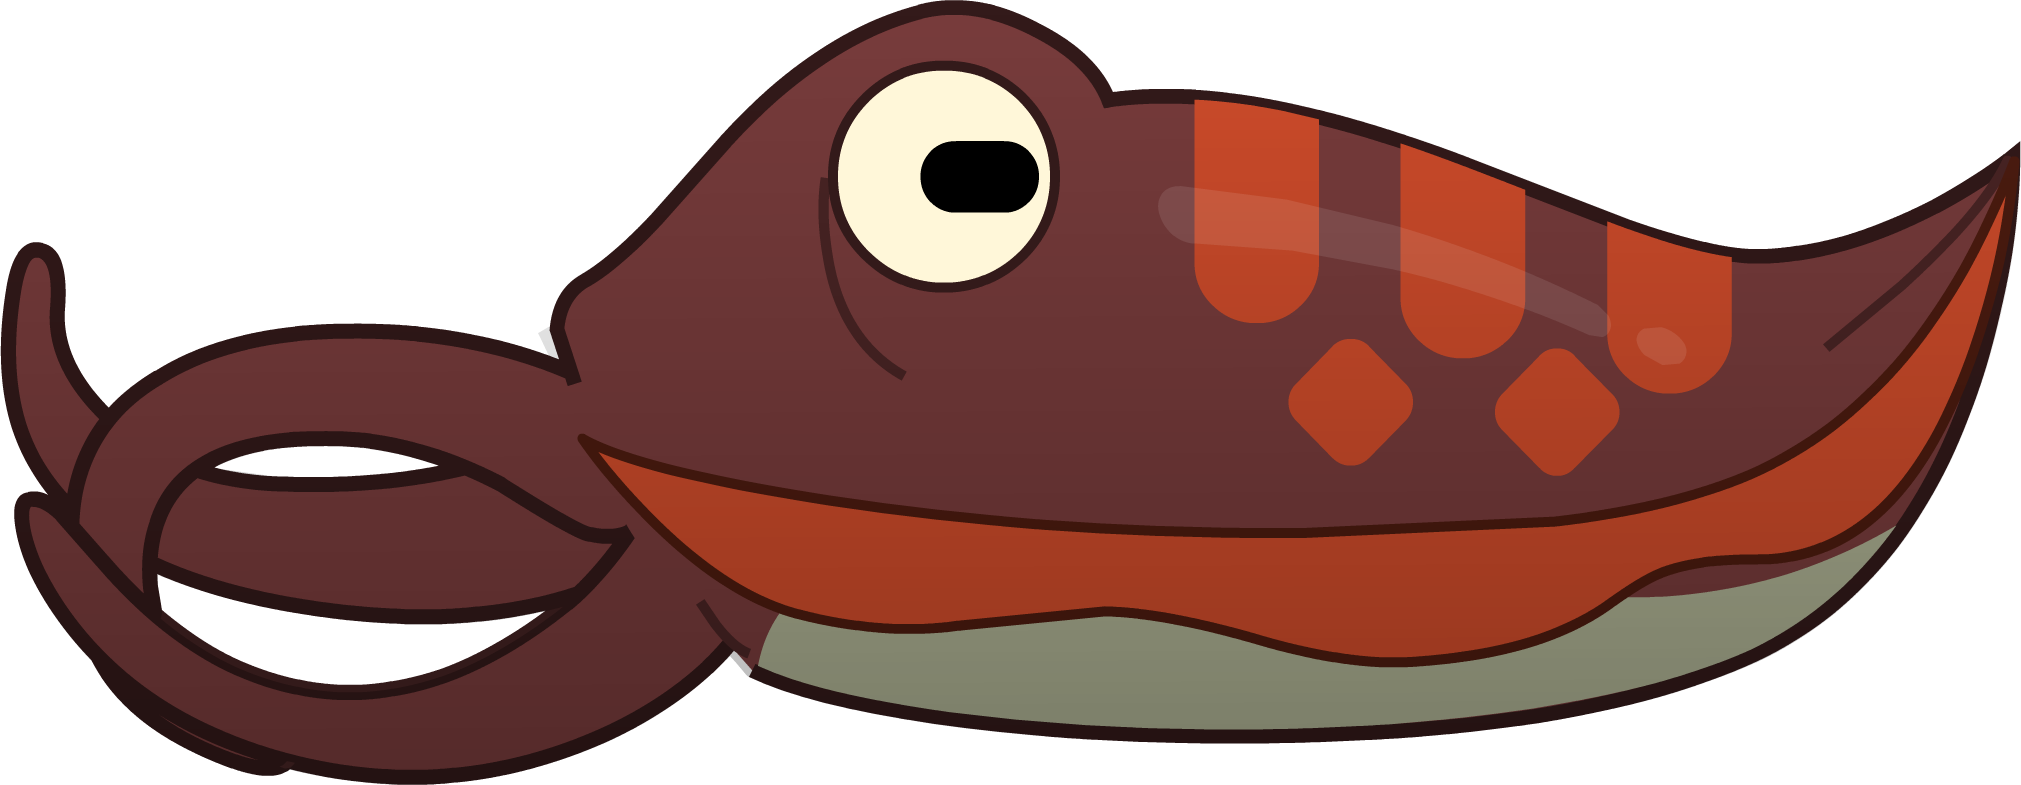 A Cartoon Of A Fish